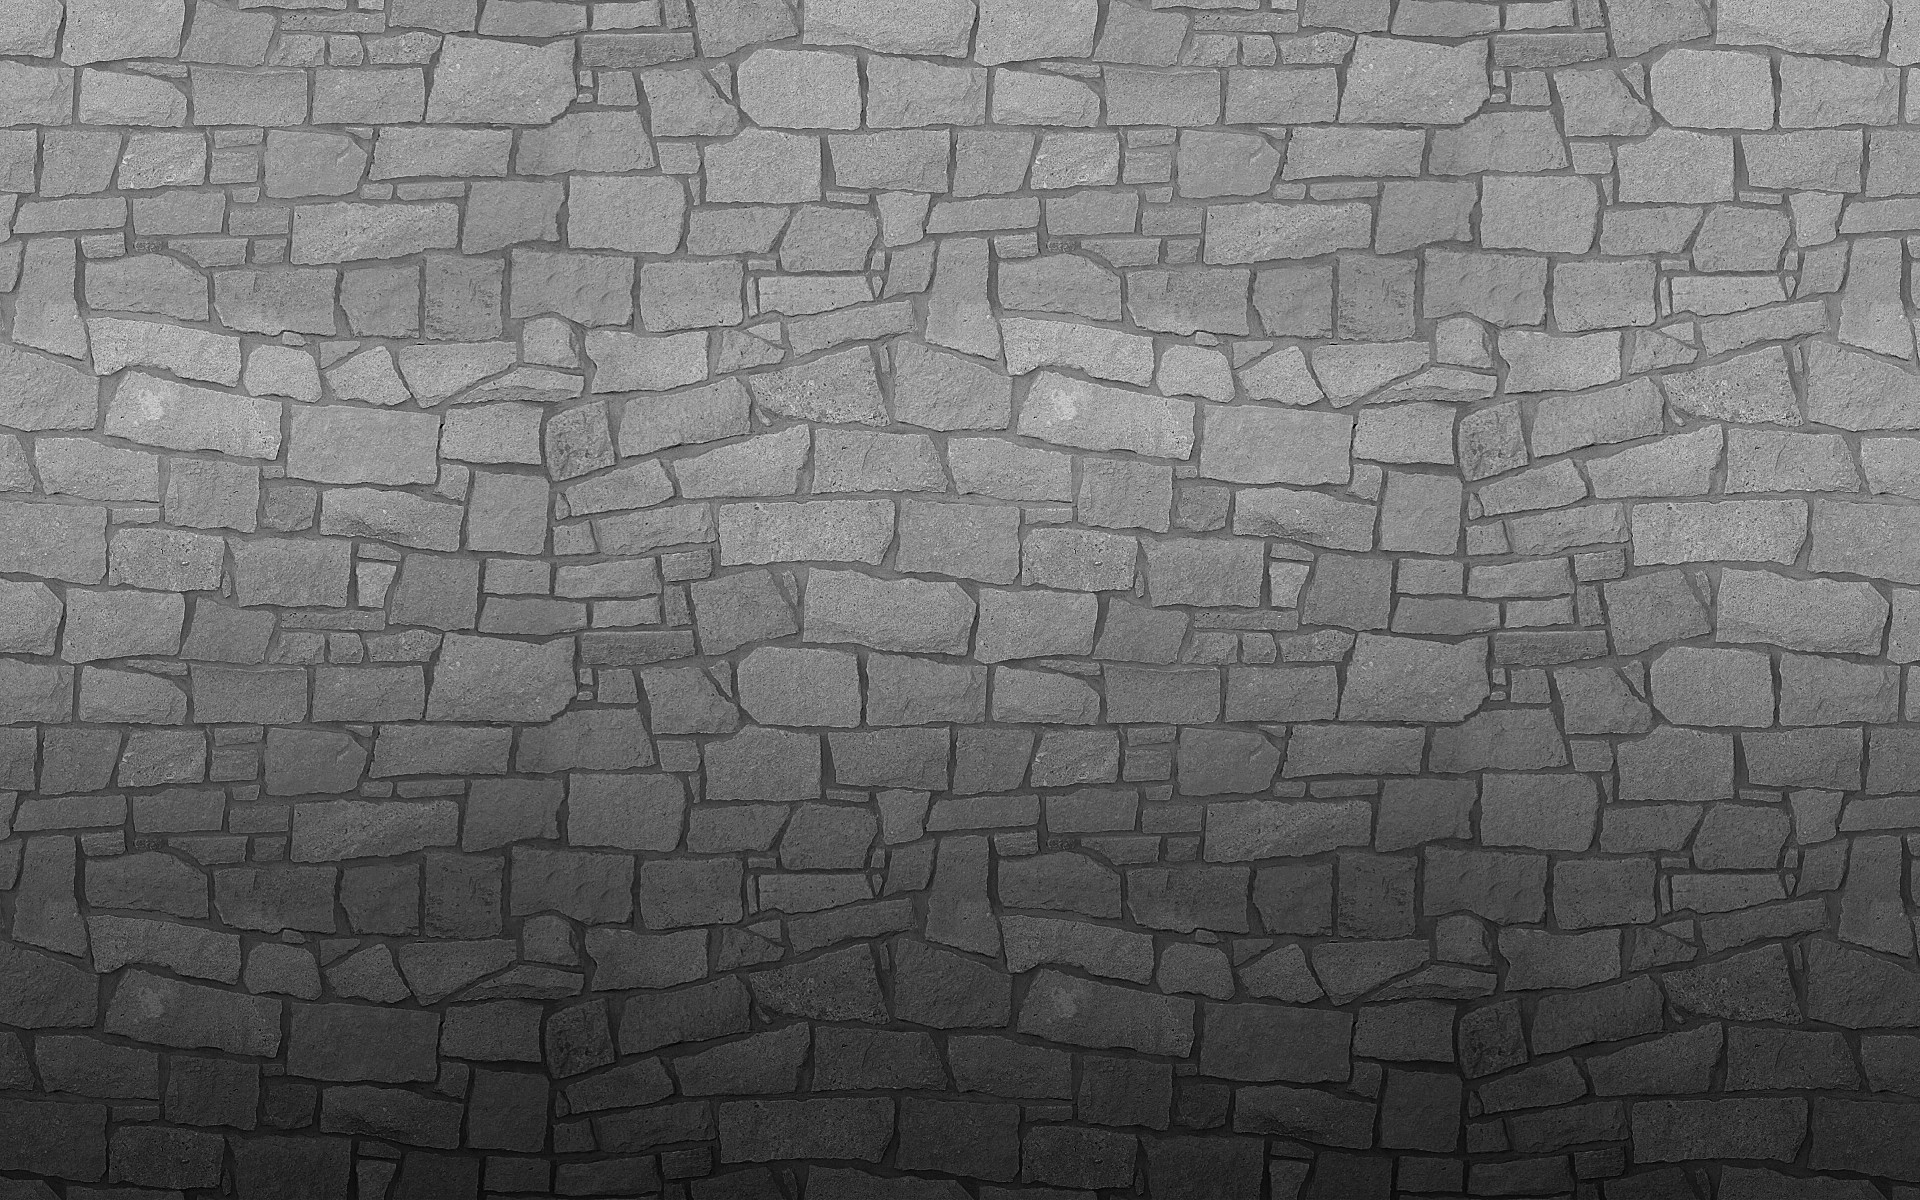 The gray stone wall